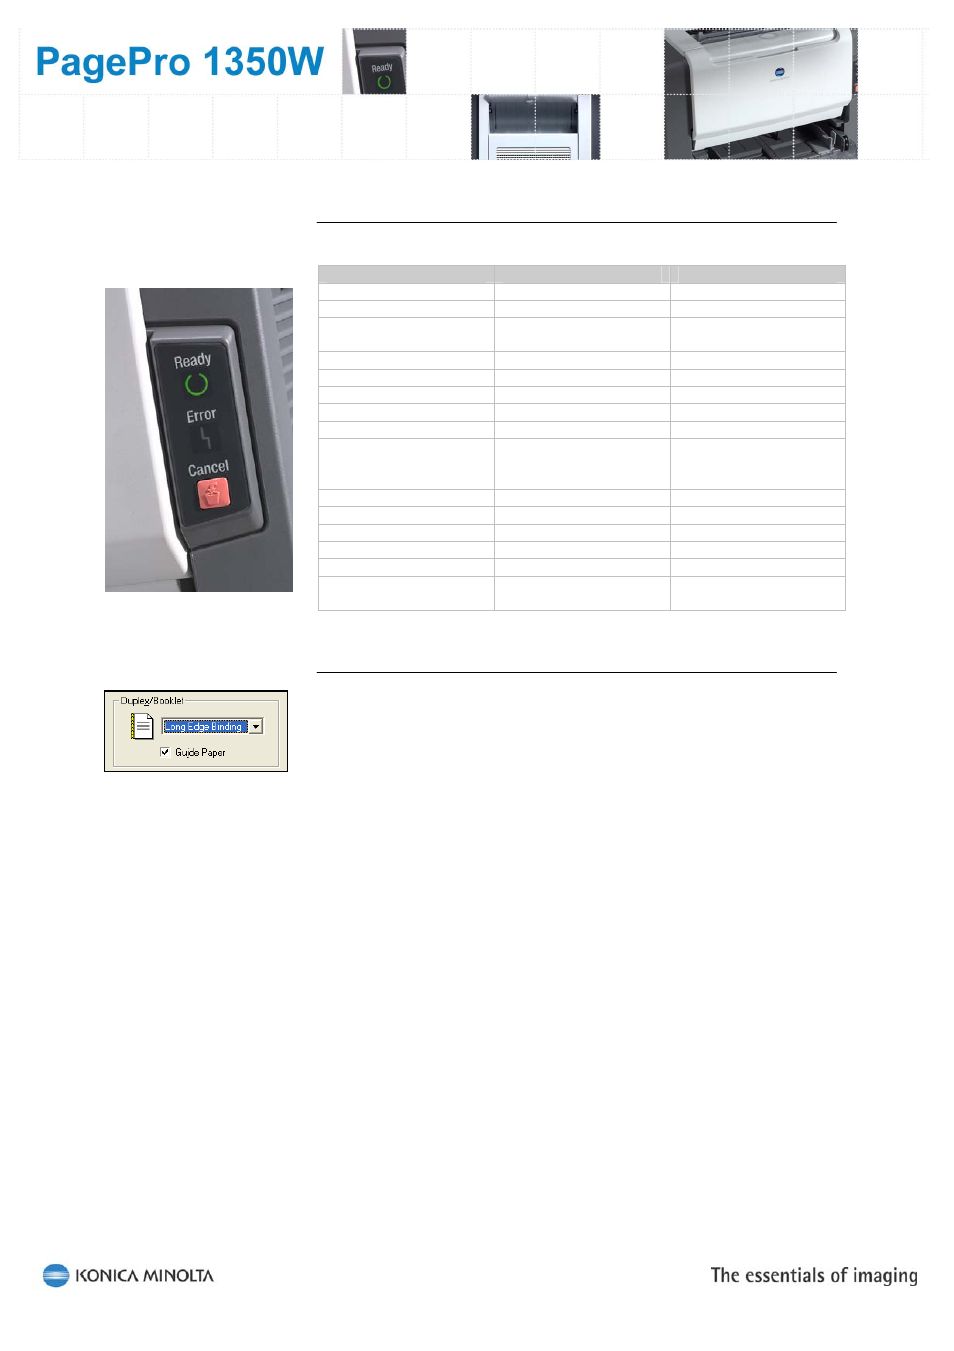 Printer Control Panel Ready Error Konica Minolta Pagepro 1350w User Manual Page 15 18